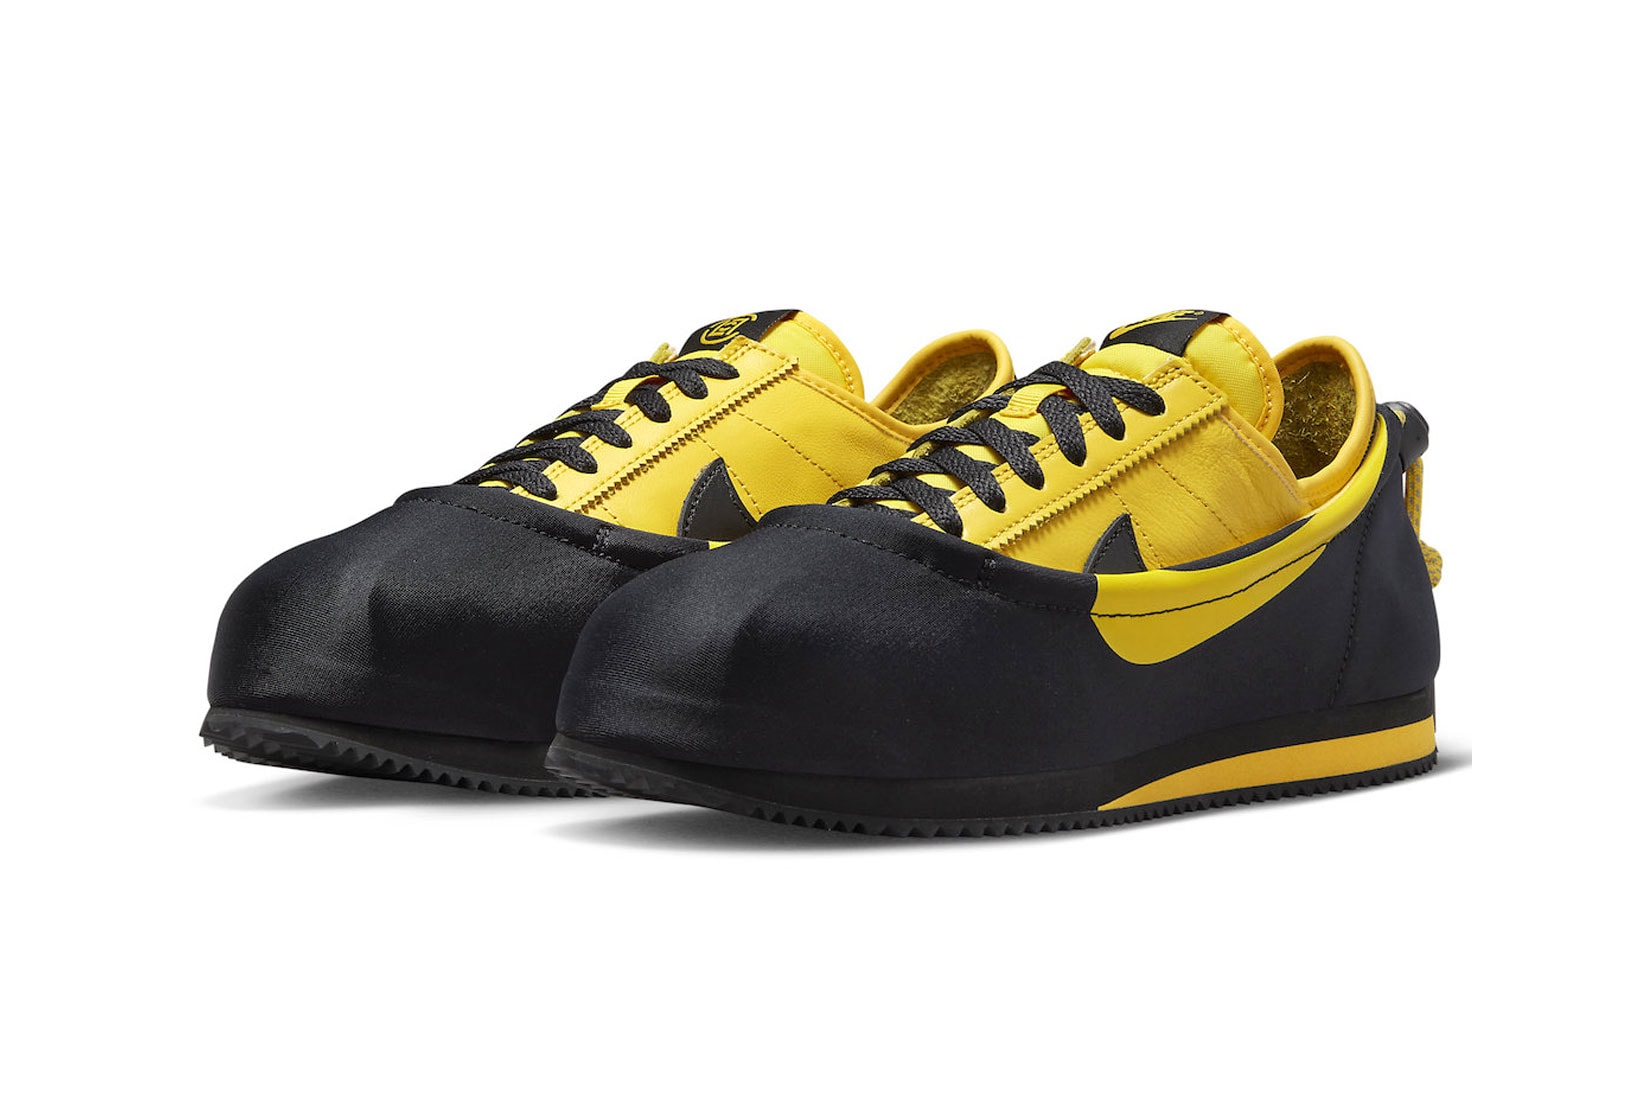 CLOT Nike Cortez CLOTEZ Collaboration Bruce Lee Yellow Black Images Release Info